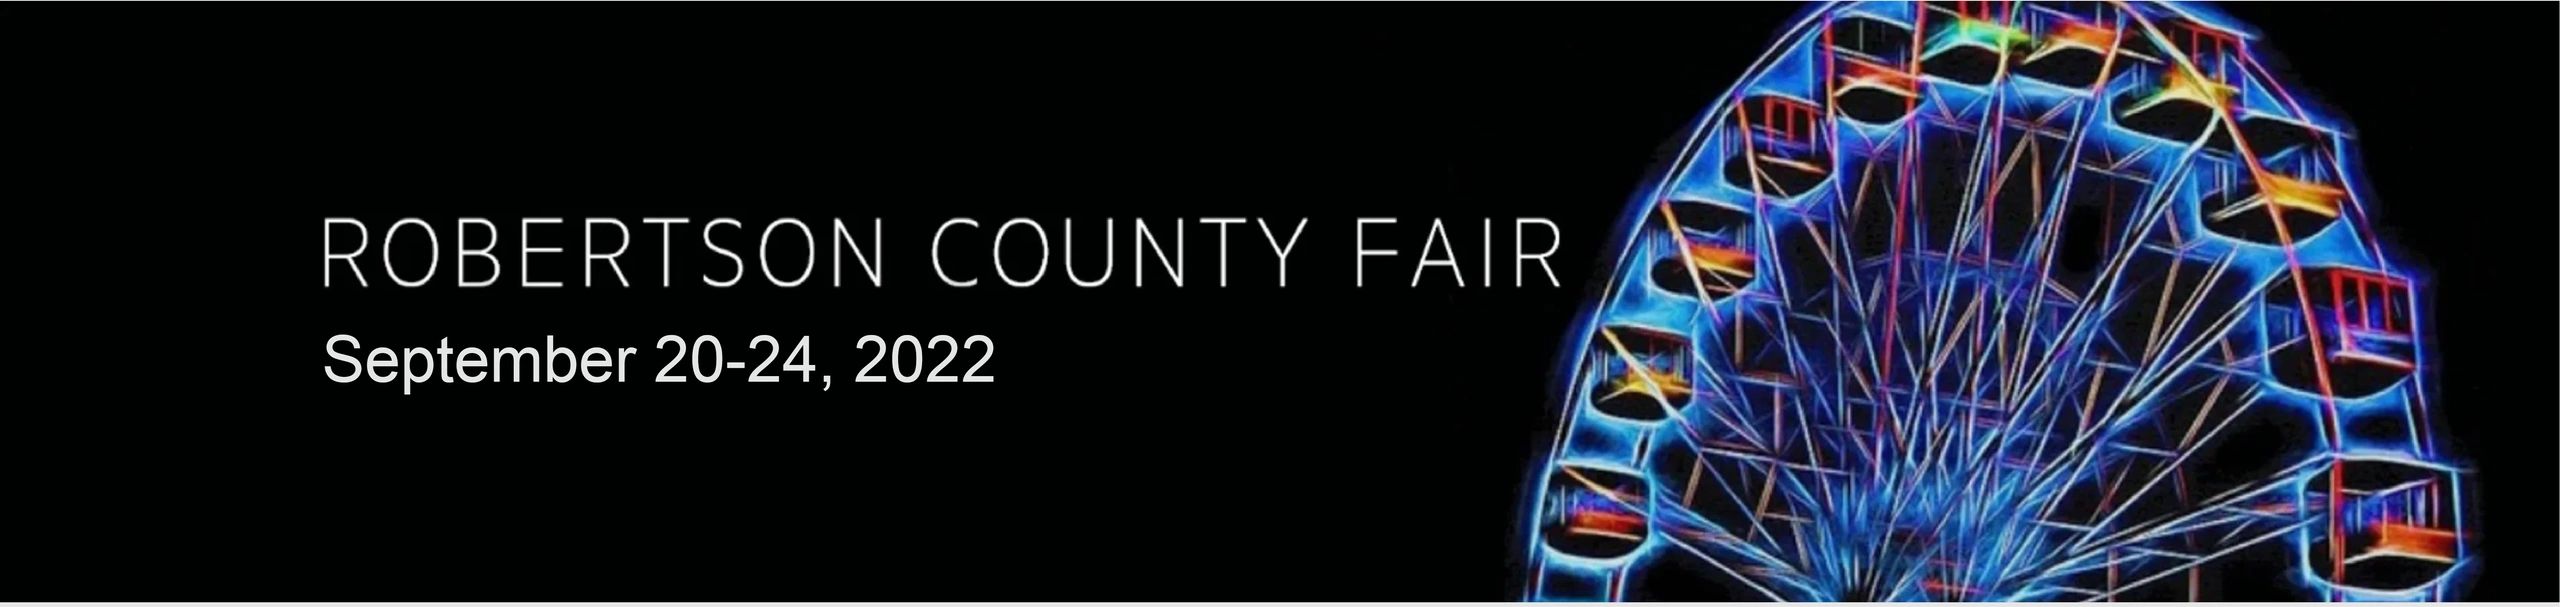 Robertson County Fair Association Fairgrounds, Facility Rental